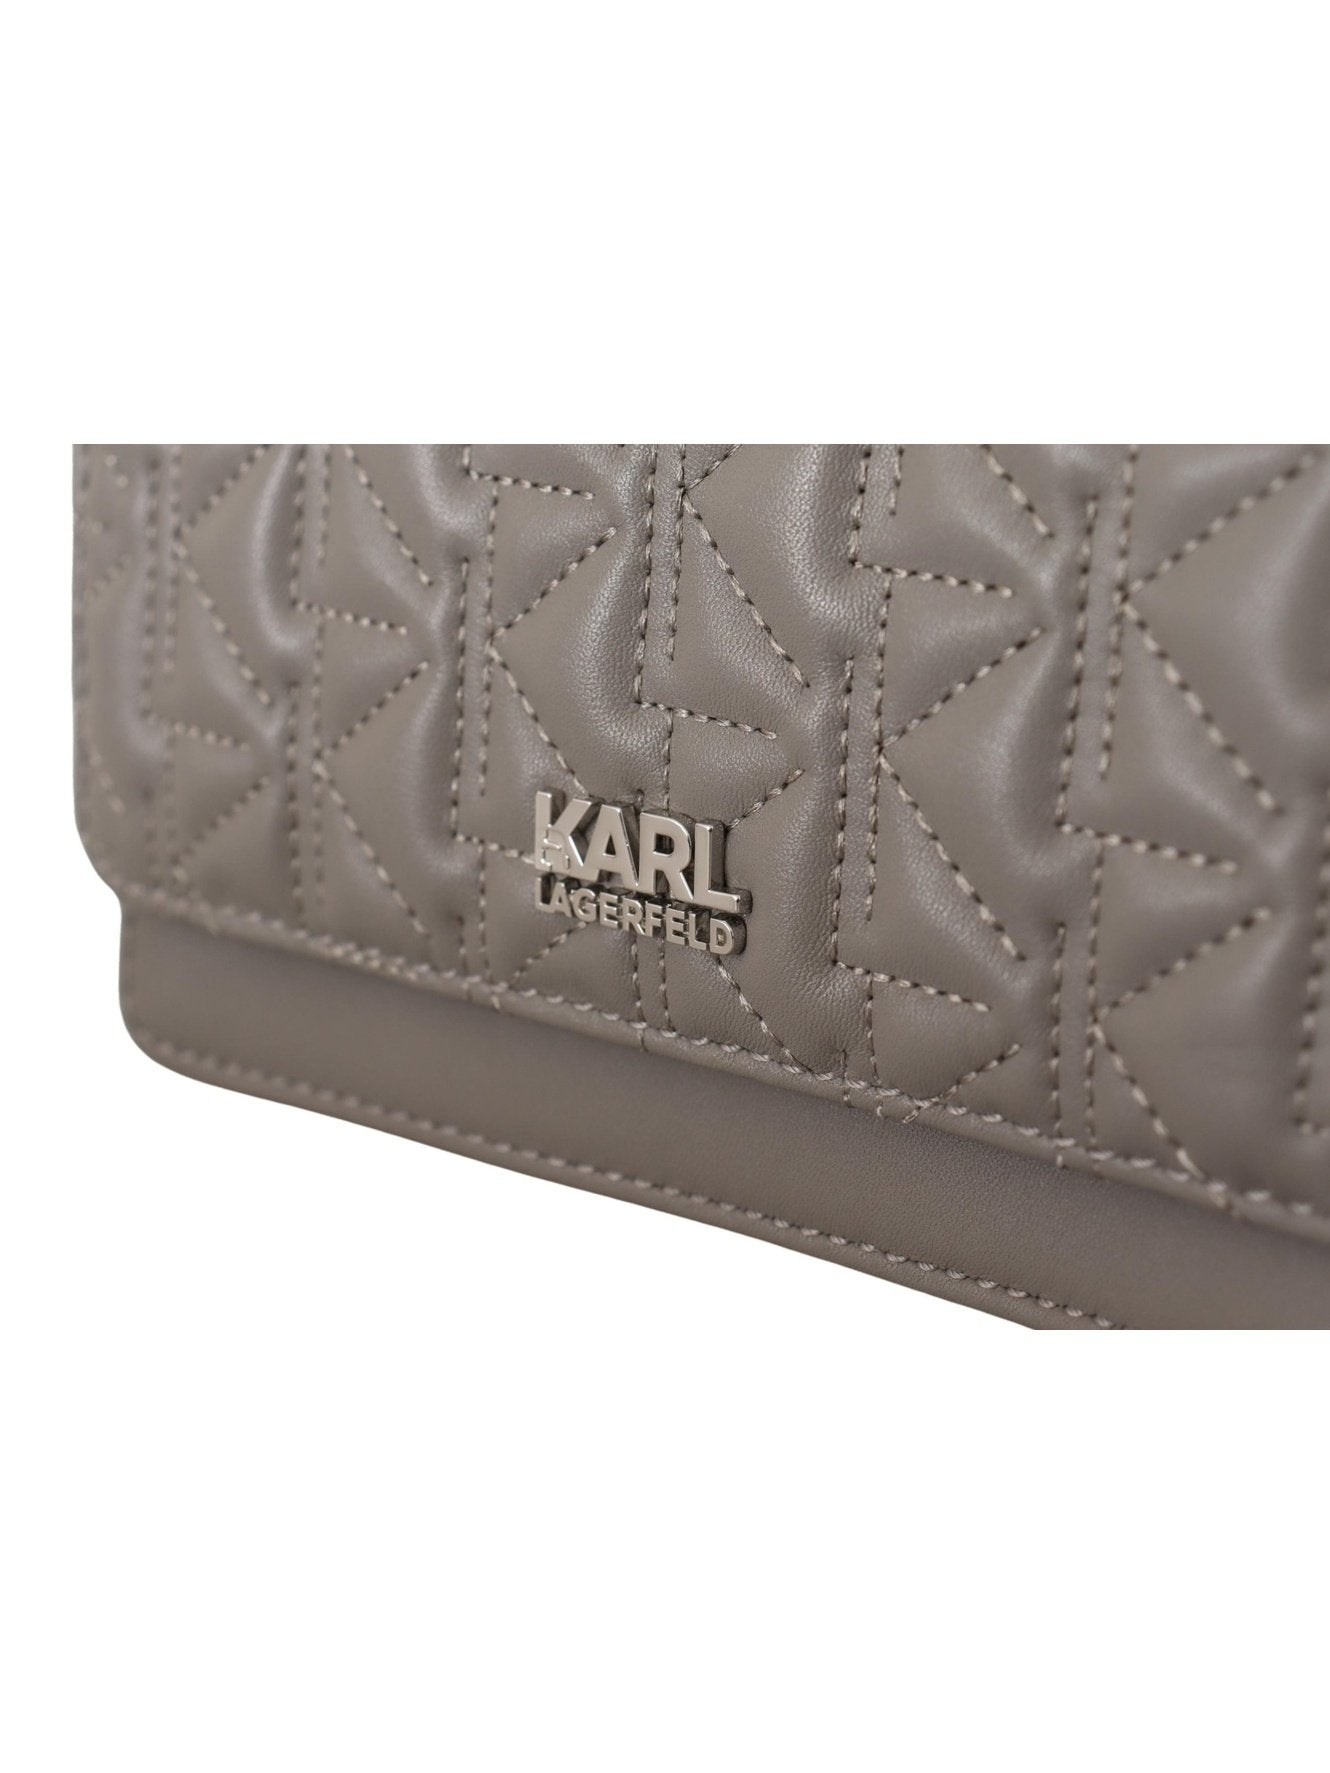 Karl Lagerfeld Mala Light Grey Leather xquisitlab